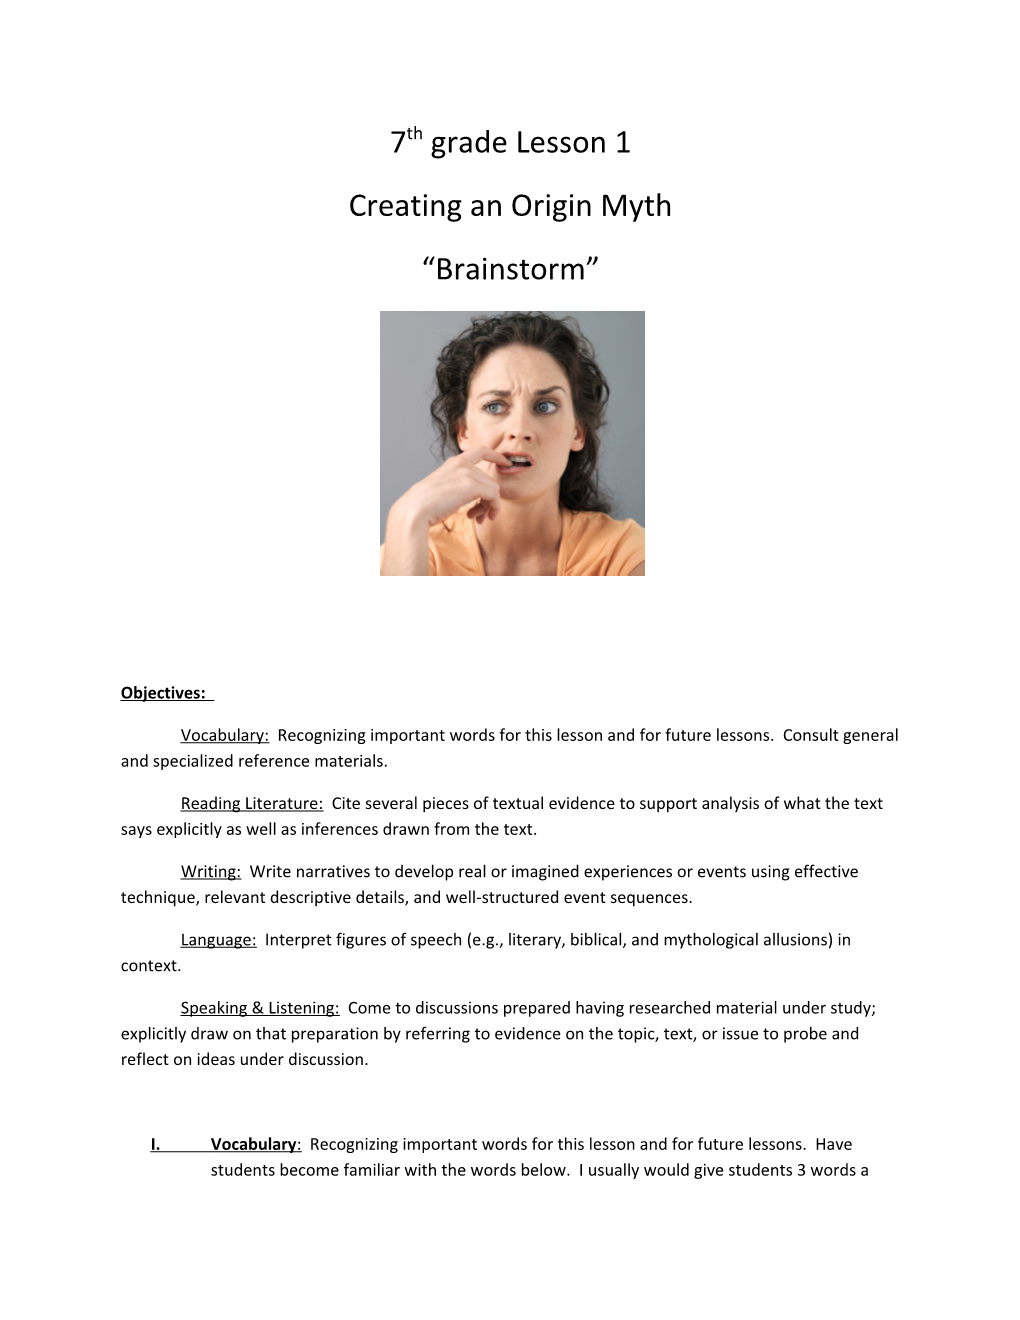 Creating an Origin Myth